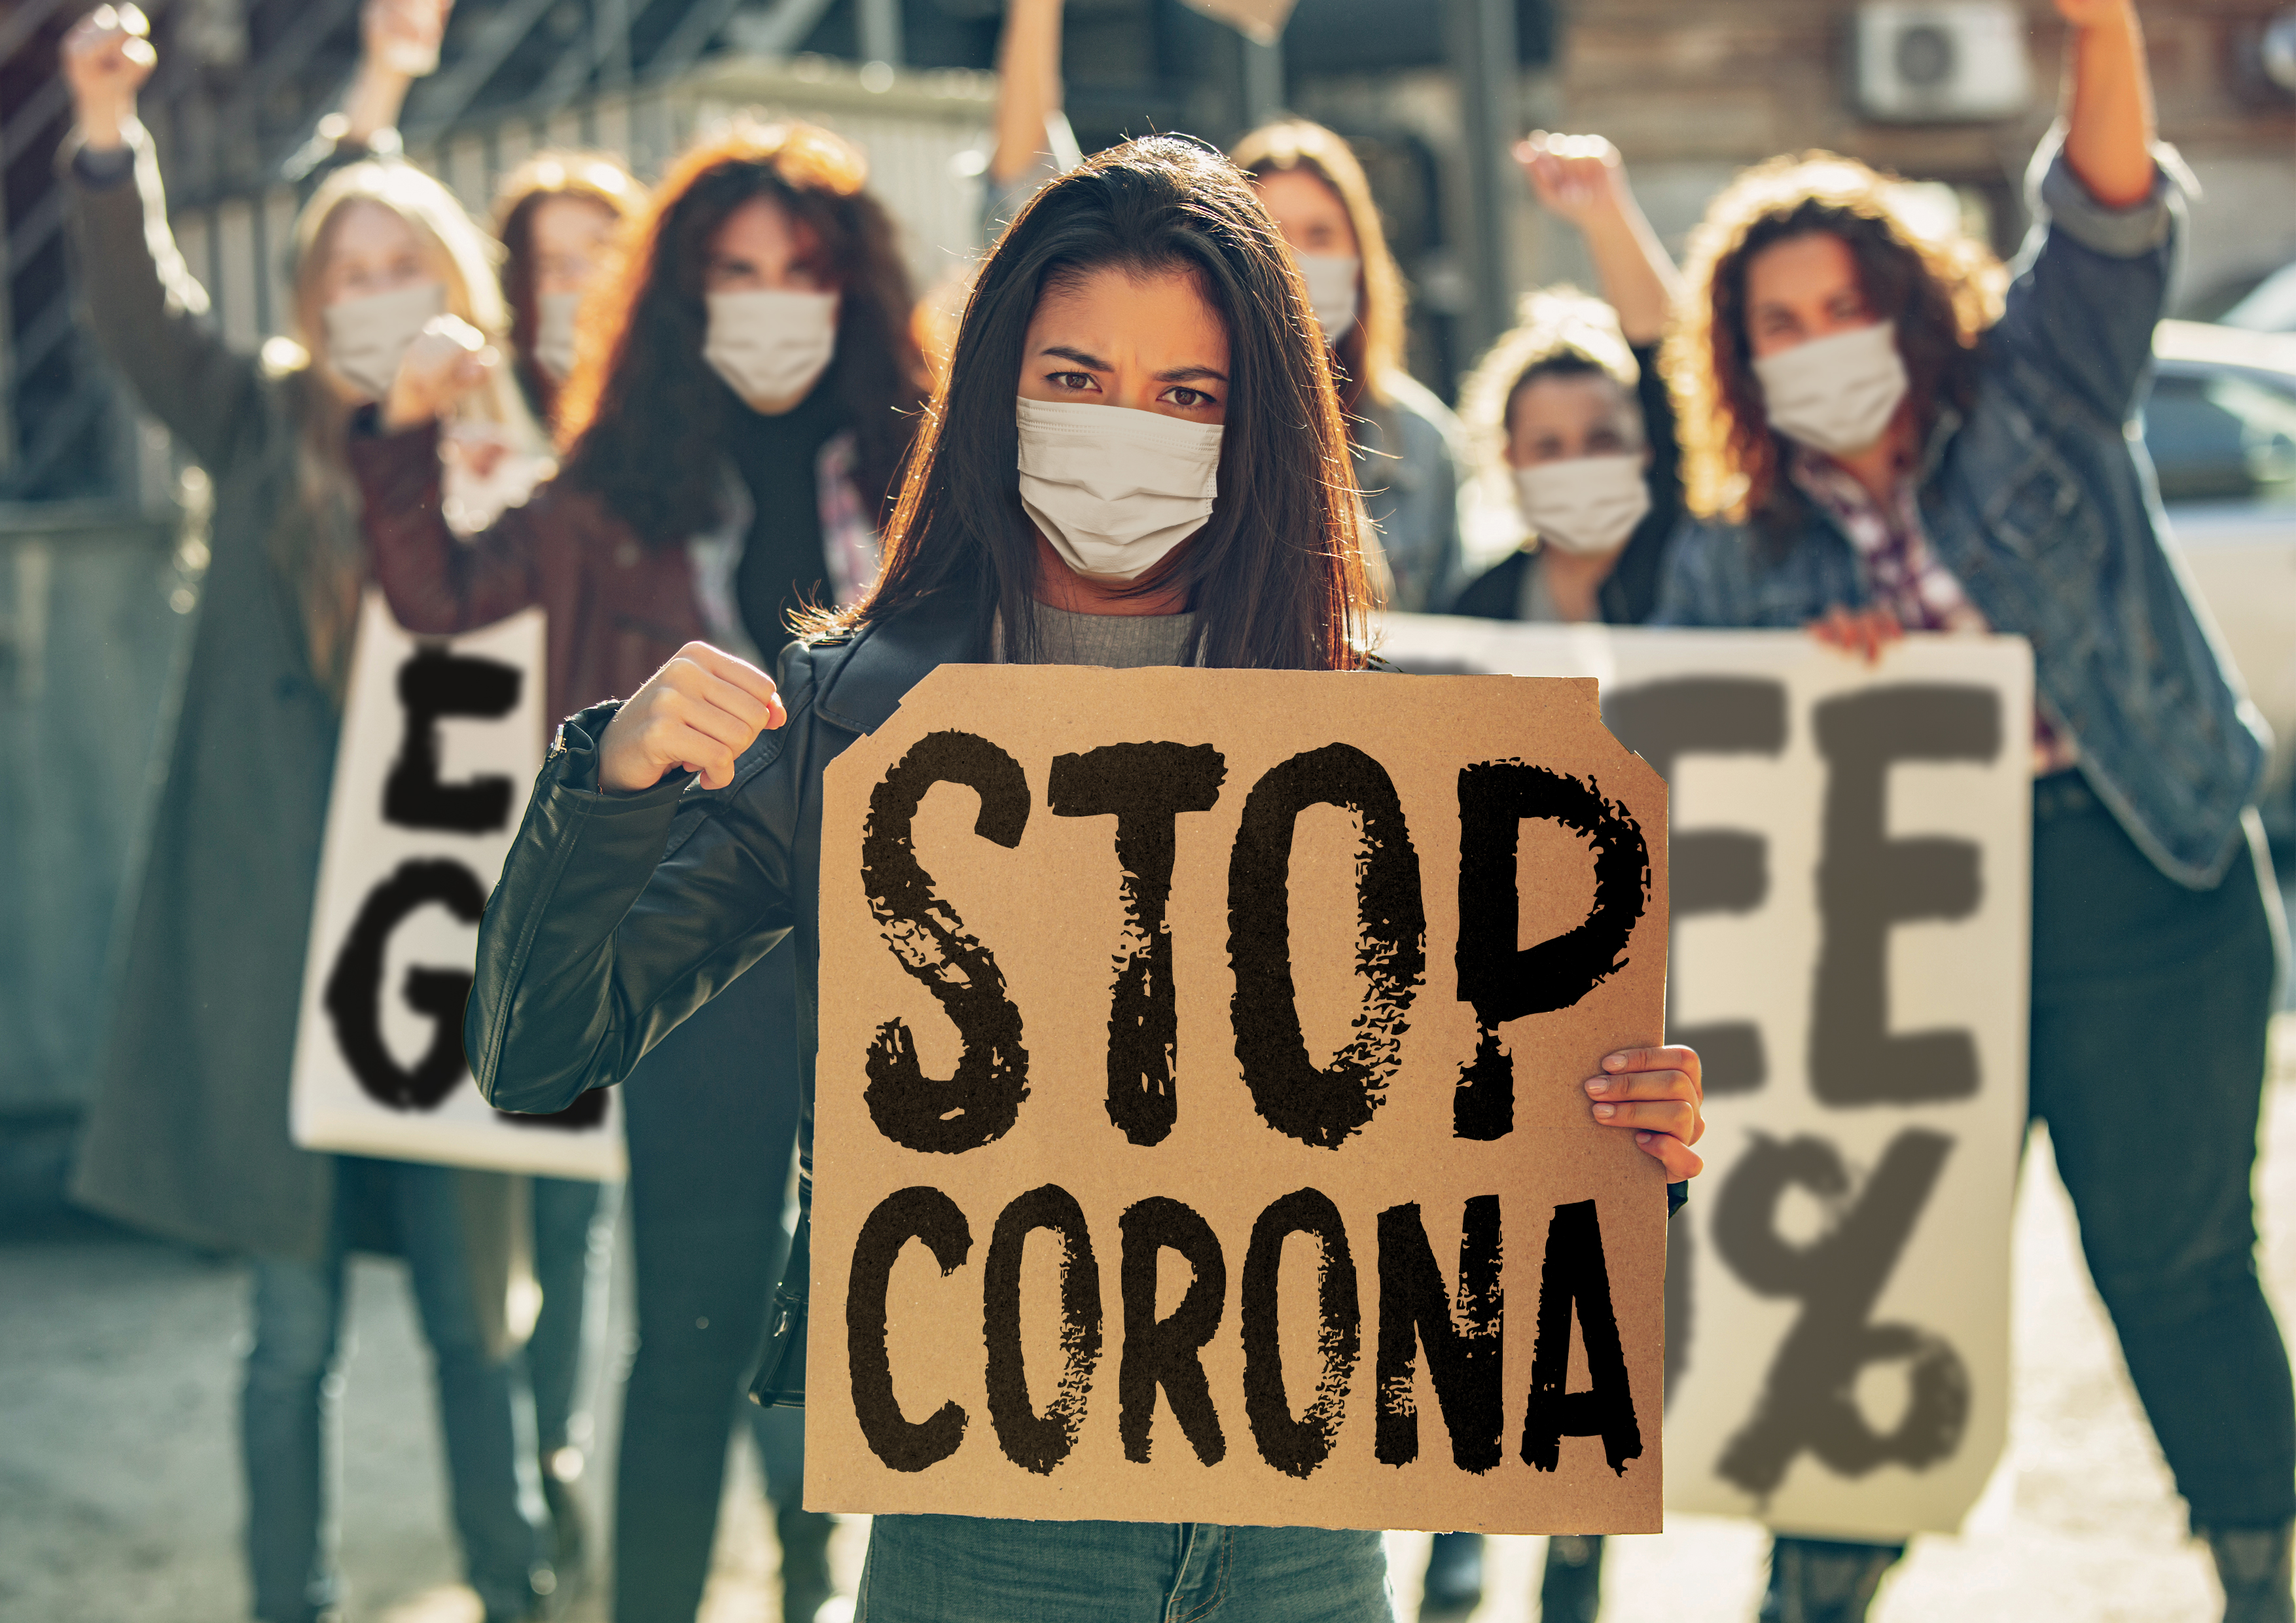 Corona demonstration with sign saying "stop corona"